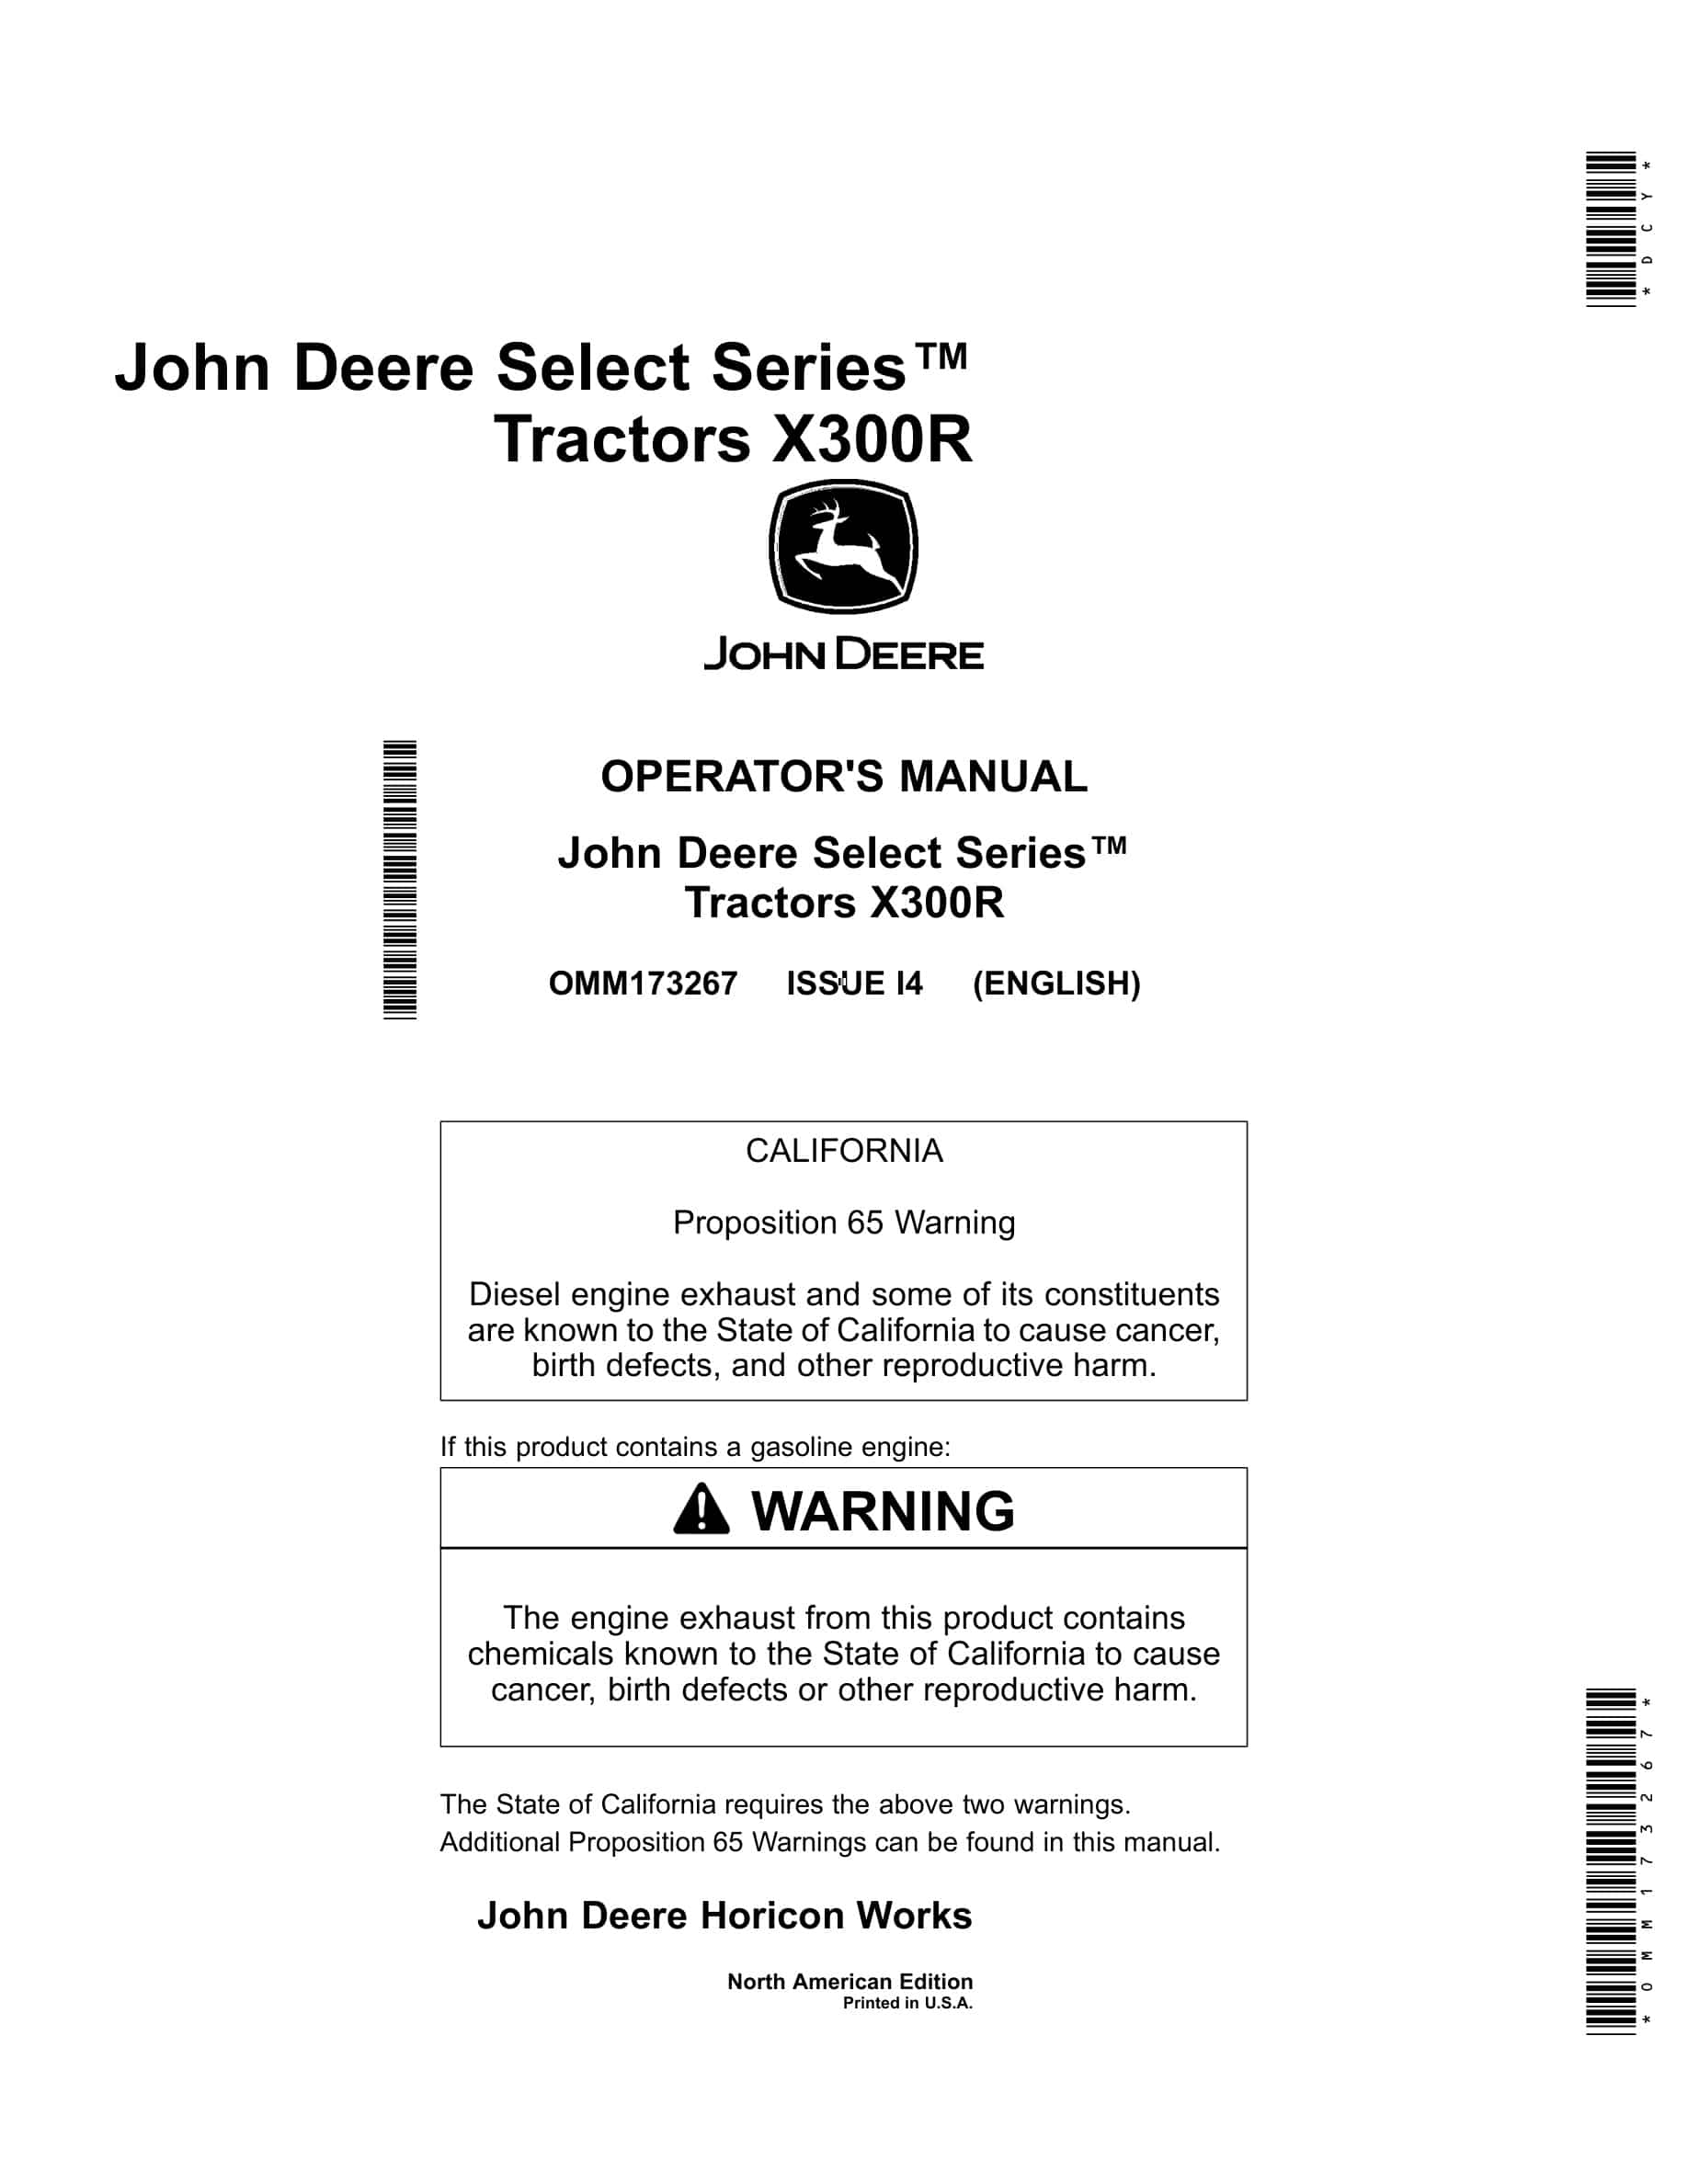 John Deere X300R Tractor Operator Manual OMM173267-1